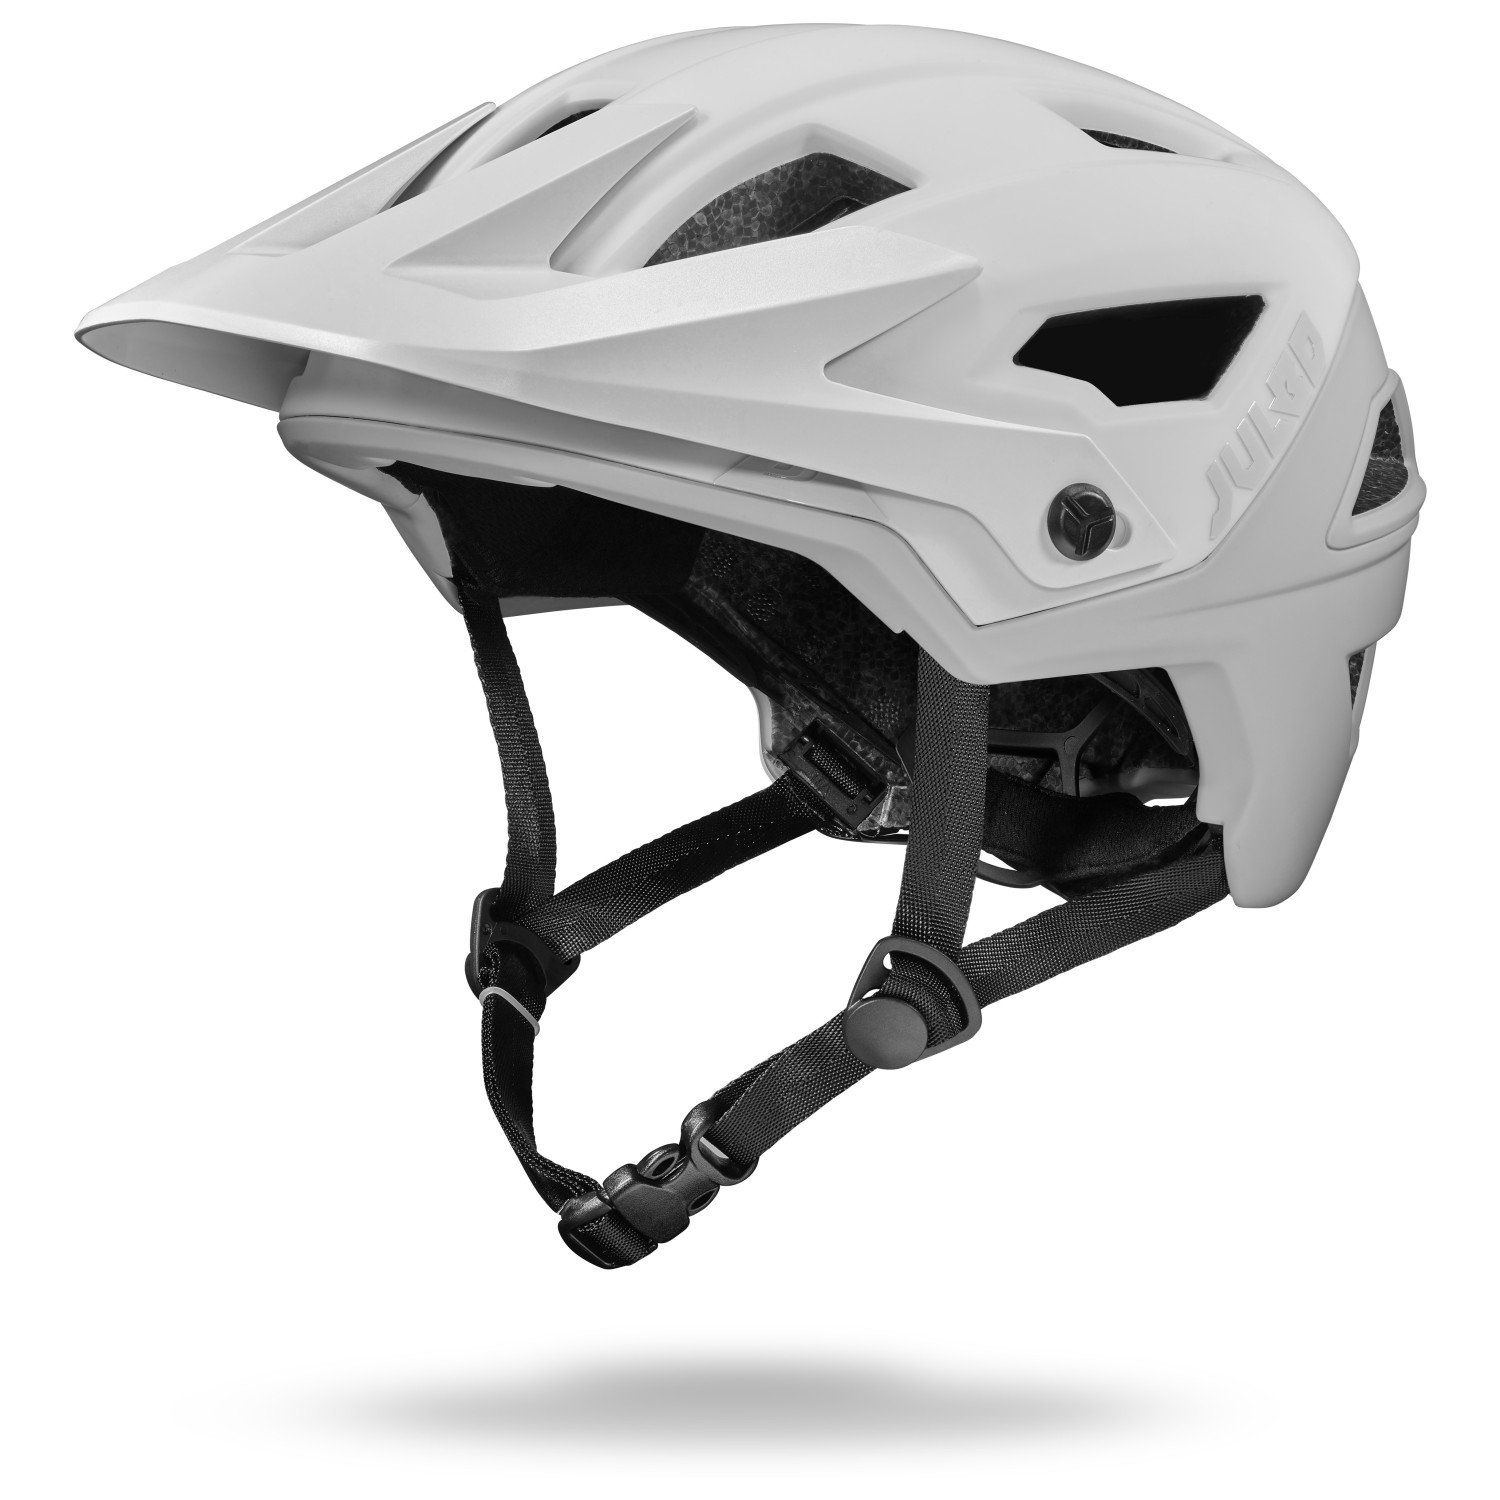 Велосипедный шлем Julbo Rock, цвет White/Grey шлем велосипедный stern зеленый размер 52 56